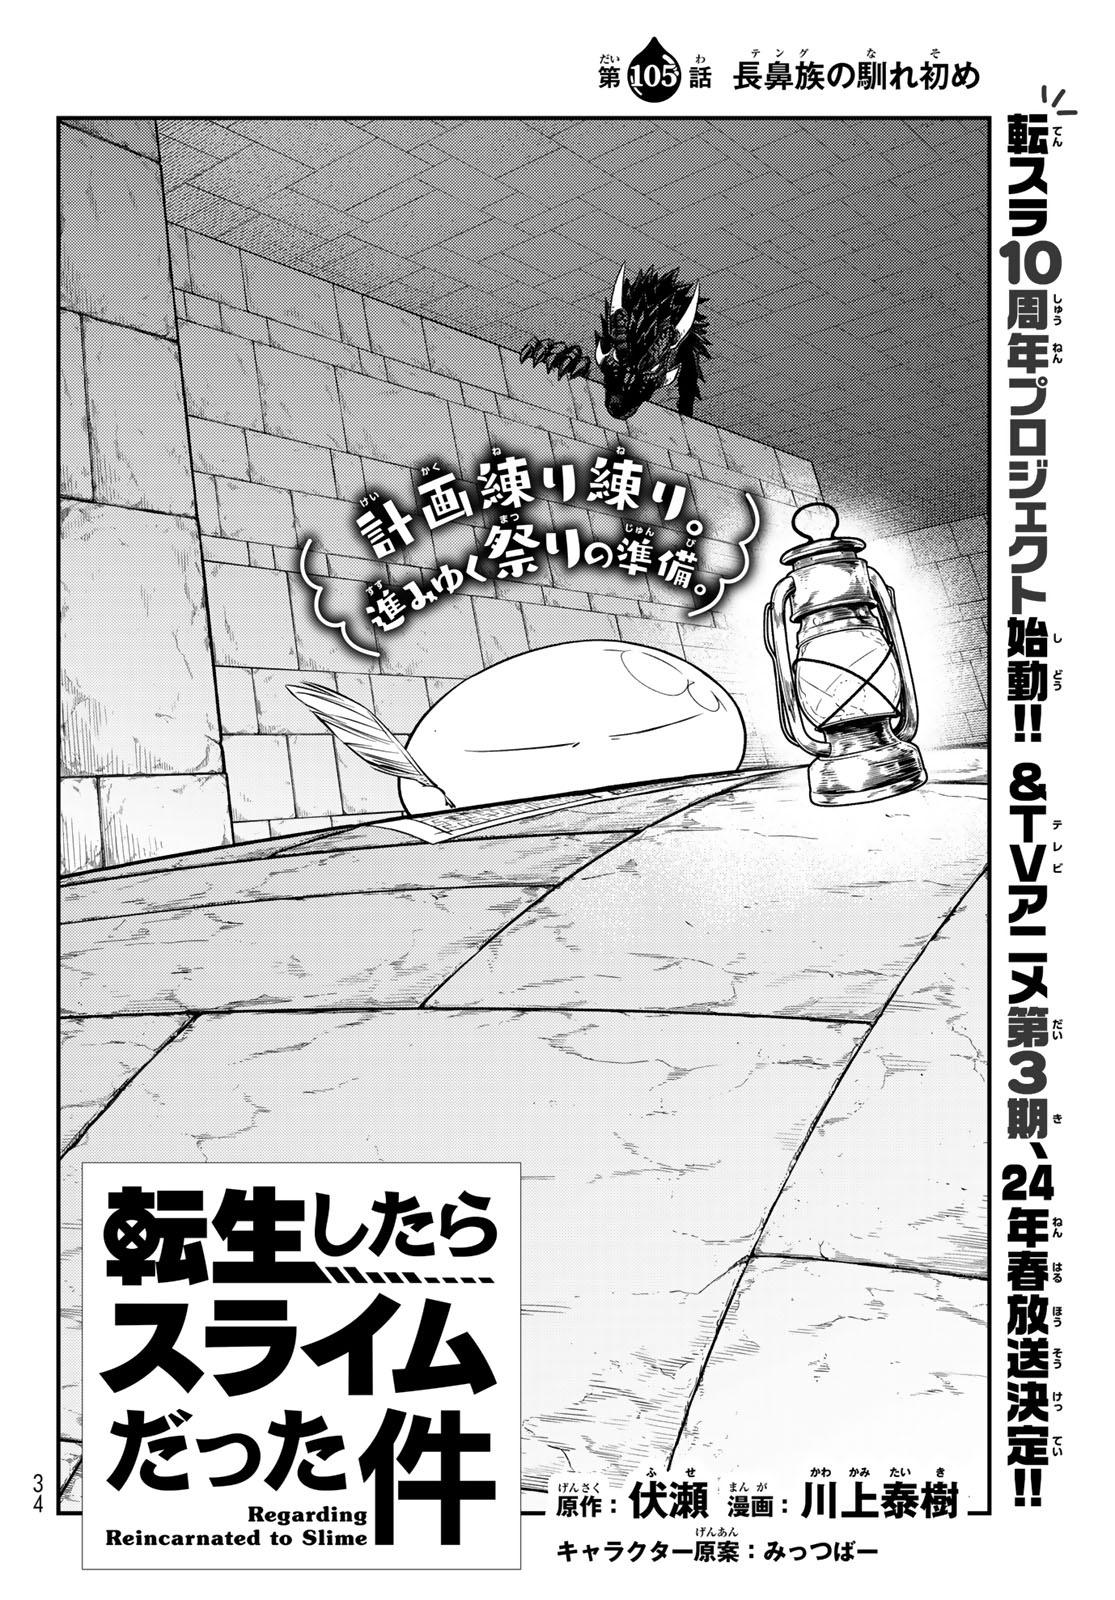 DISC] Tensura Nikki - Tensei Shitara Slime Datta Ken Chapter 53 : r/manga